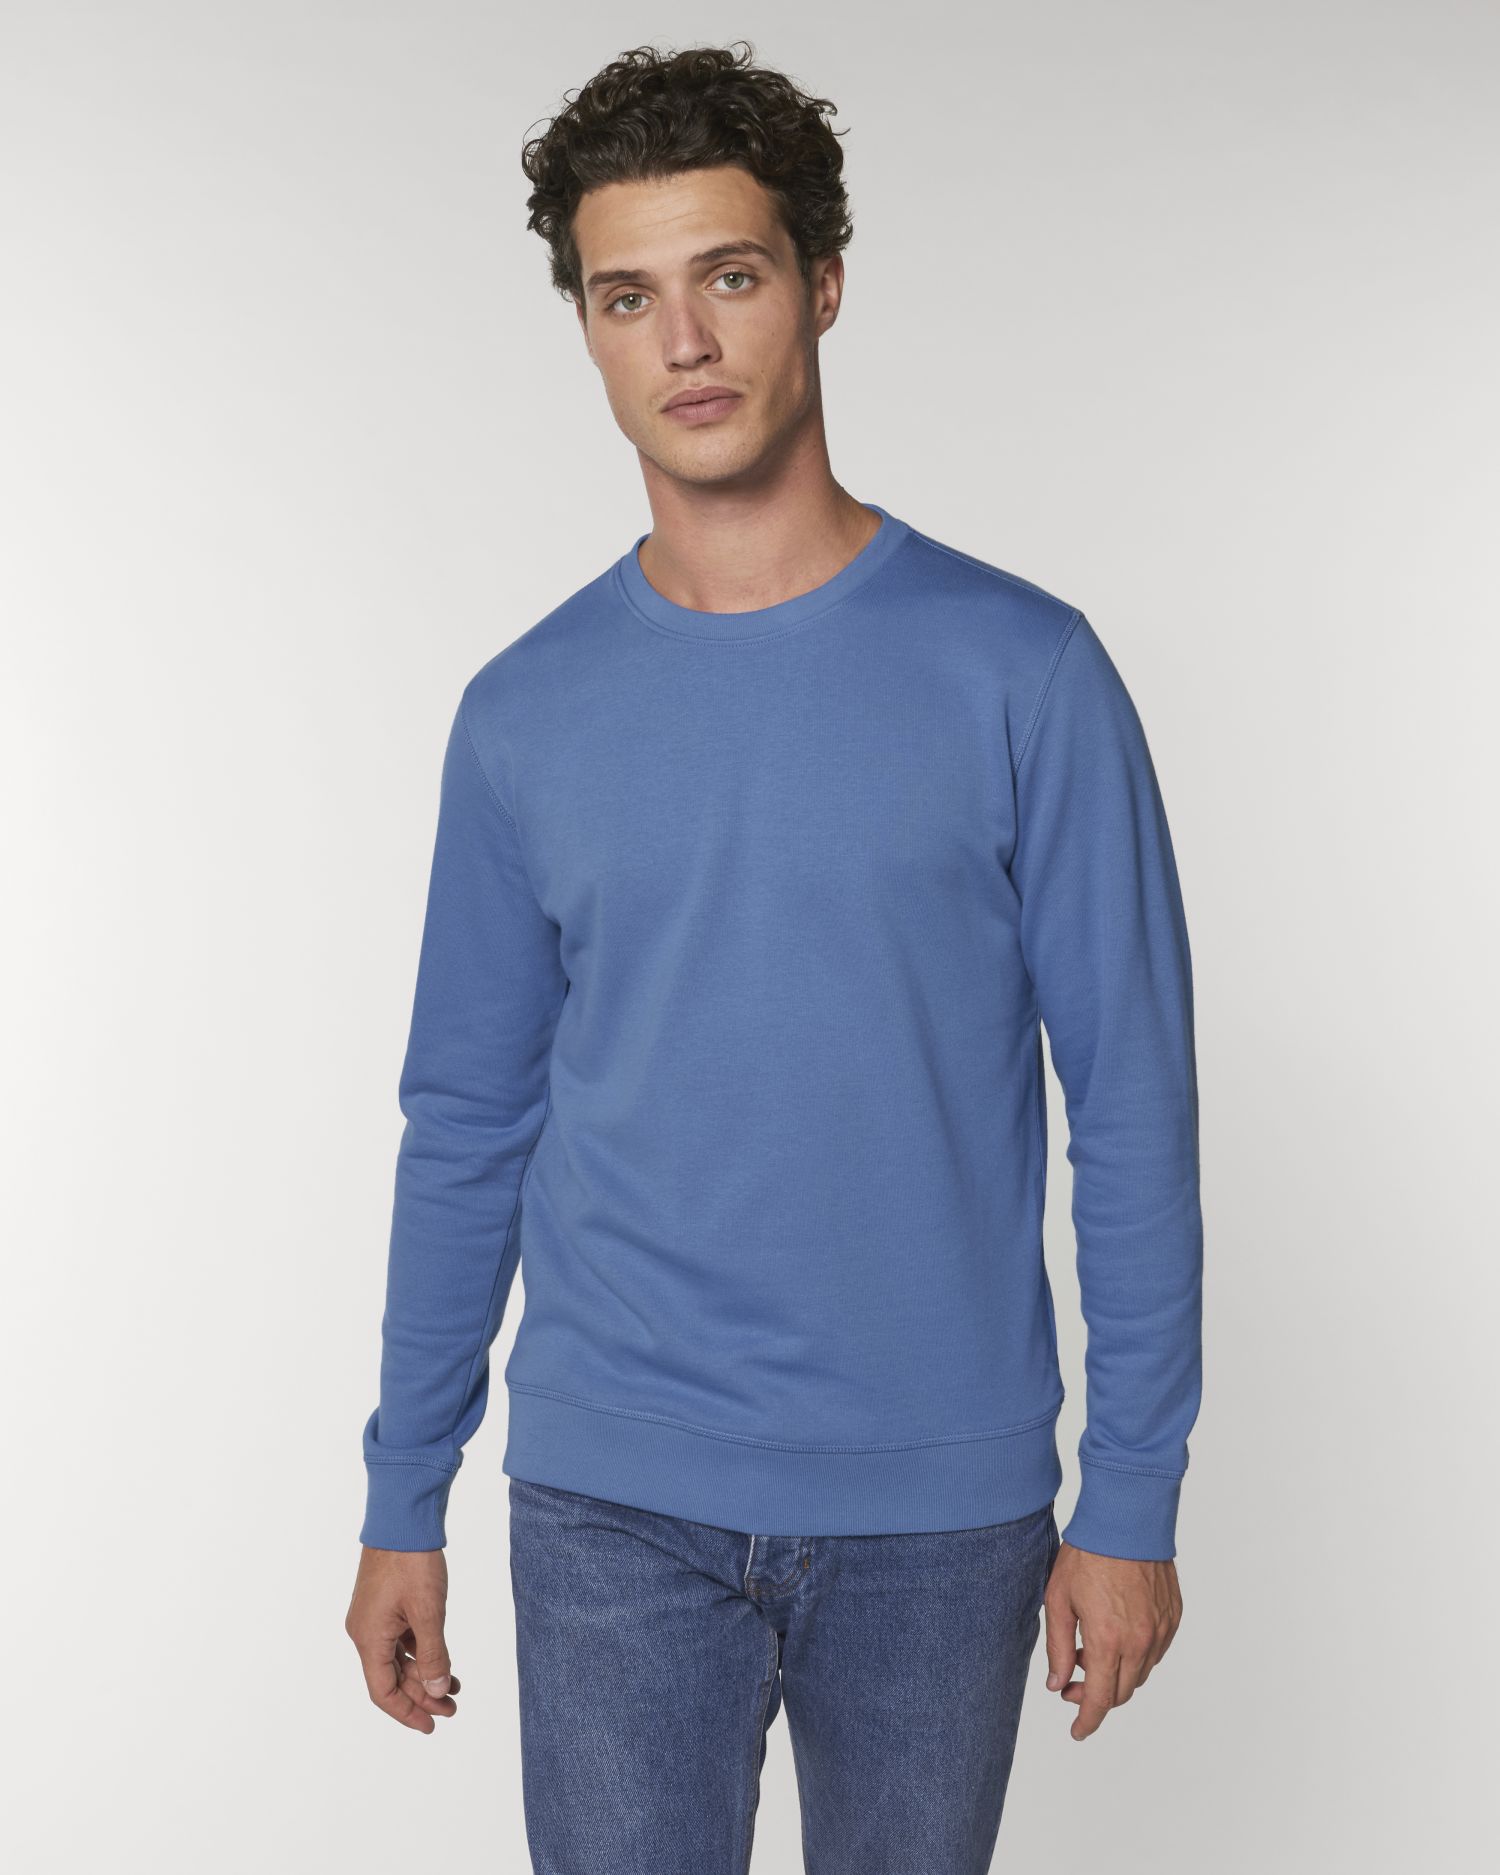 Unisex Crew neck sweatshirts Bright Blue XL